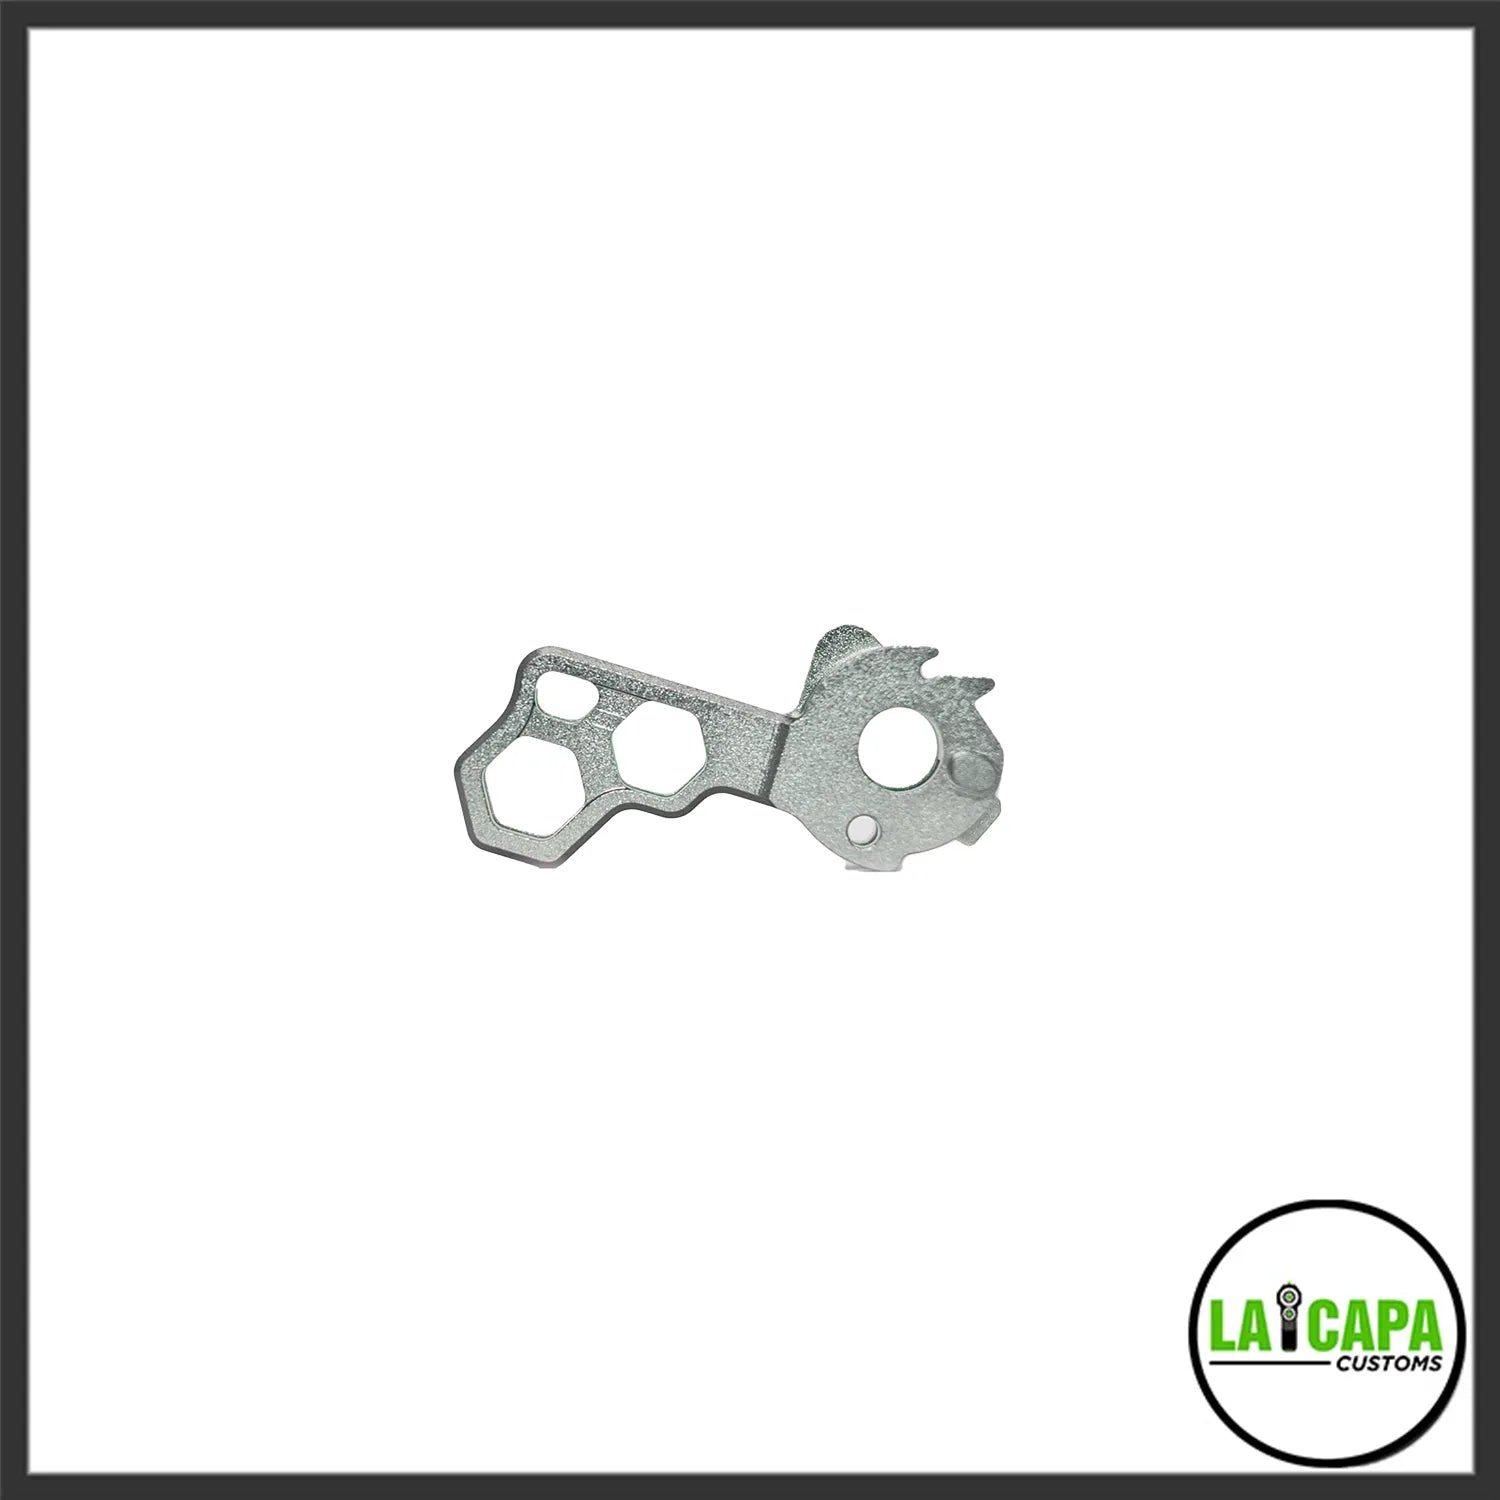 LA Capa Customs “HIVE” Duralumin Hammer for Hi Capa - Grey